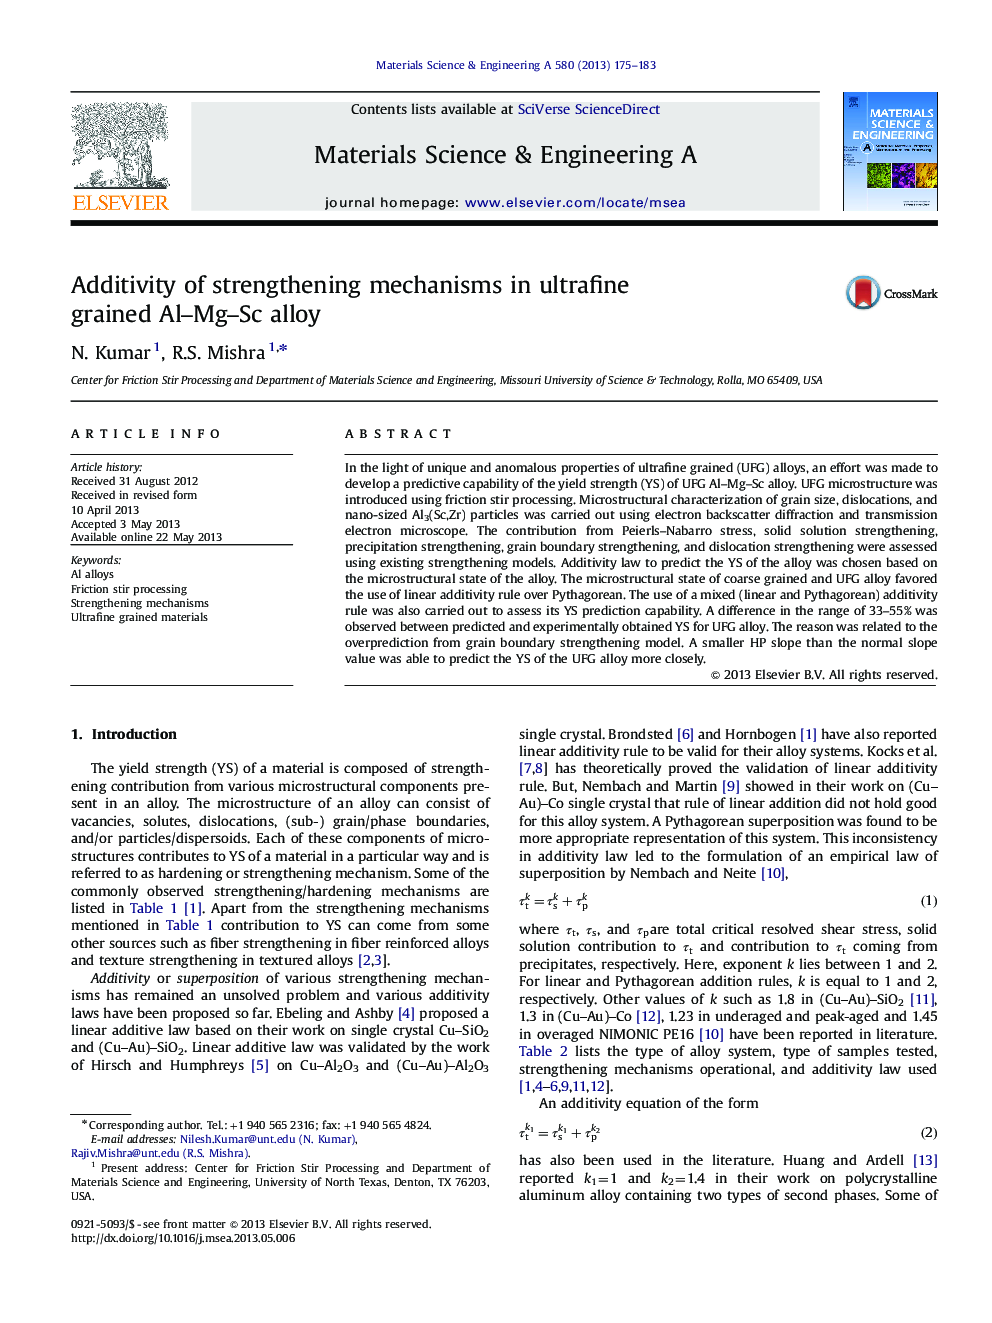 Additivity of strengthening mechanisms in ultrafine grained Al-Mg-Sc alloy